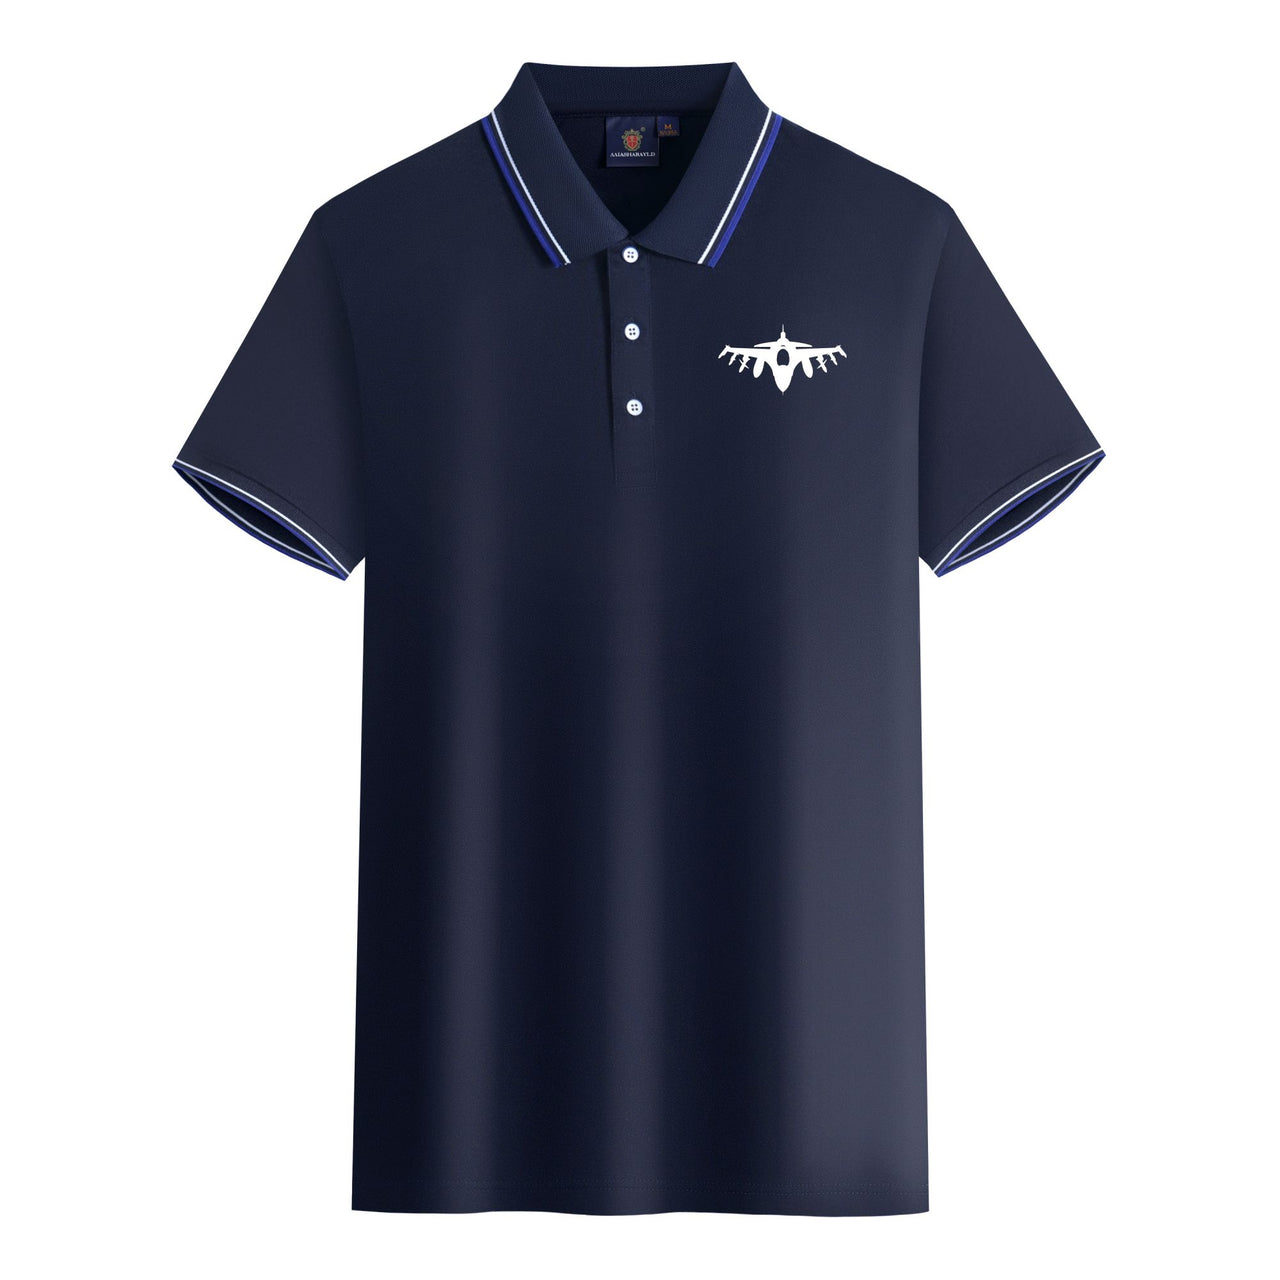 Fighting Falcon F16 Silhouette Designed Stylish Polo T-Shirts